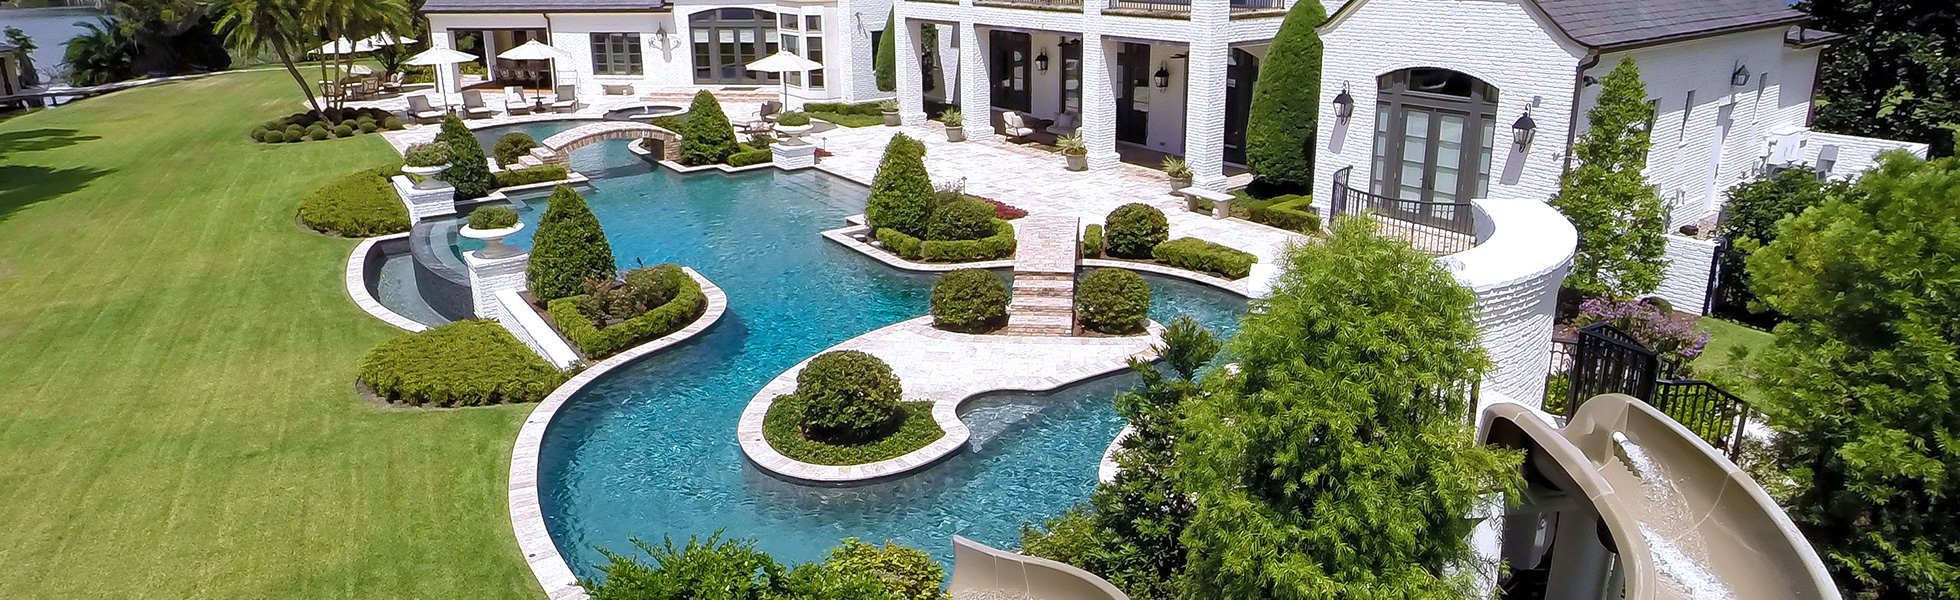 Luxury Pool Builder In Orlando Fl Custom Swimming Pools